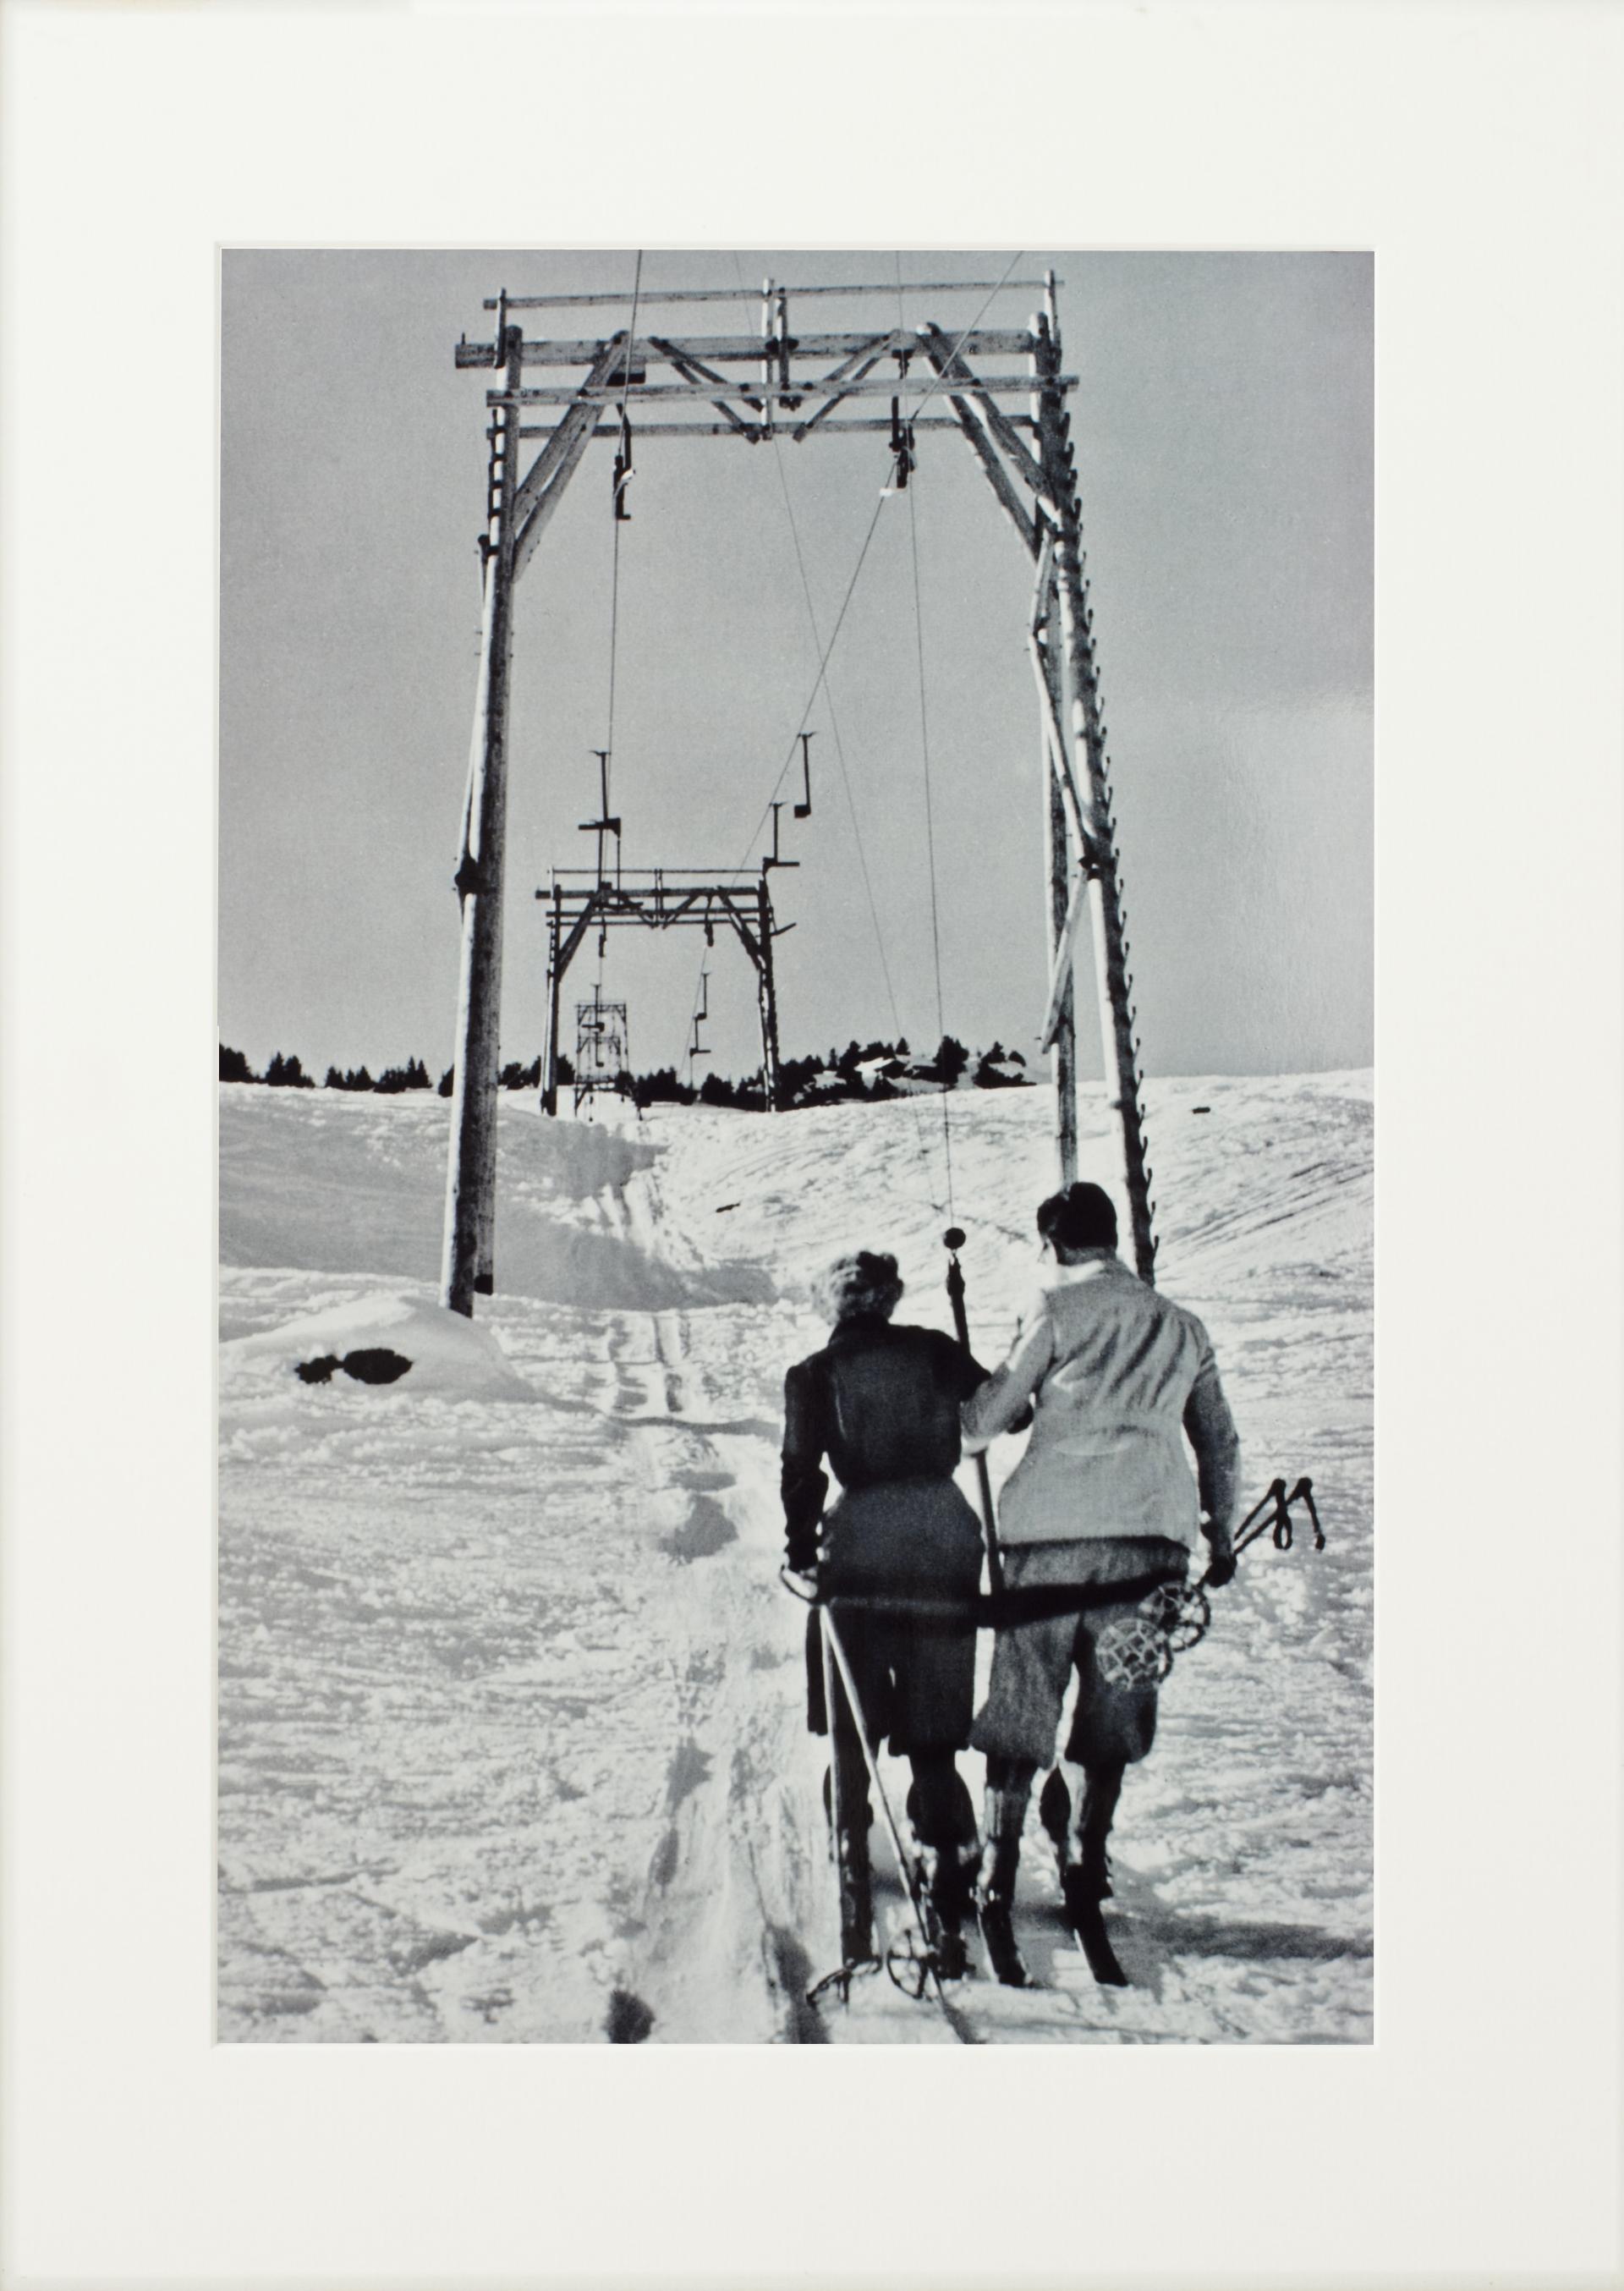 Sporting Art Alpine Ski Photograph, 'THE LIFT' Taken from 1930s Original